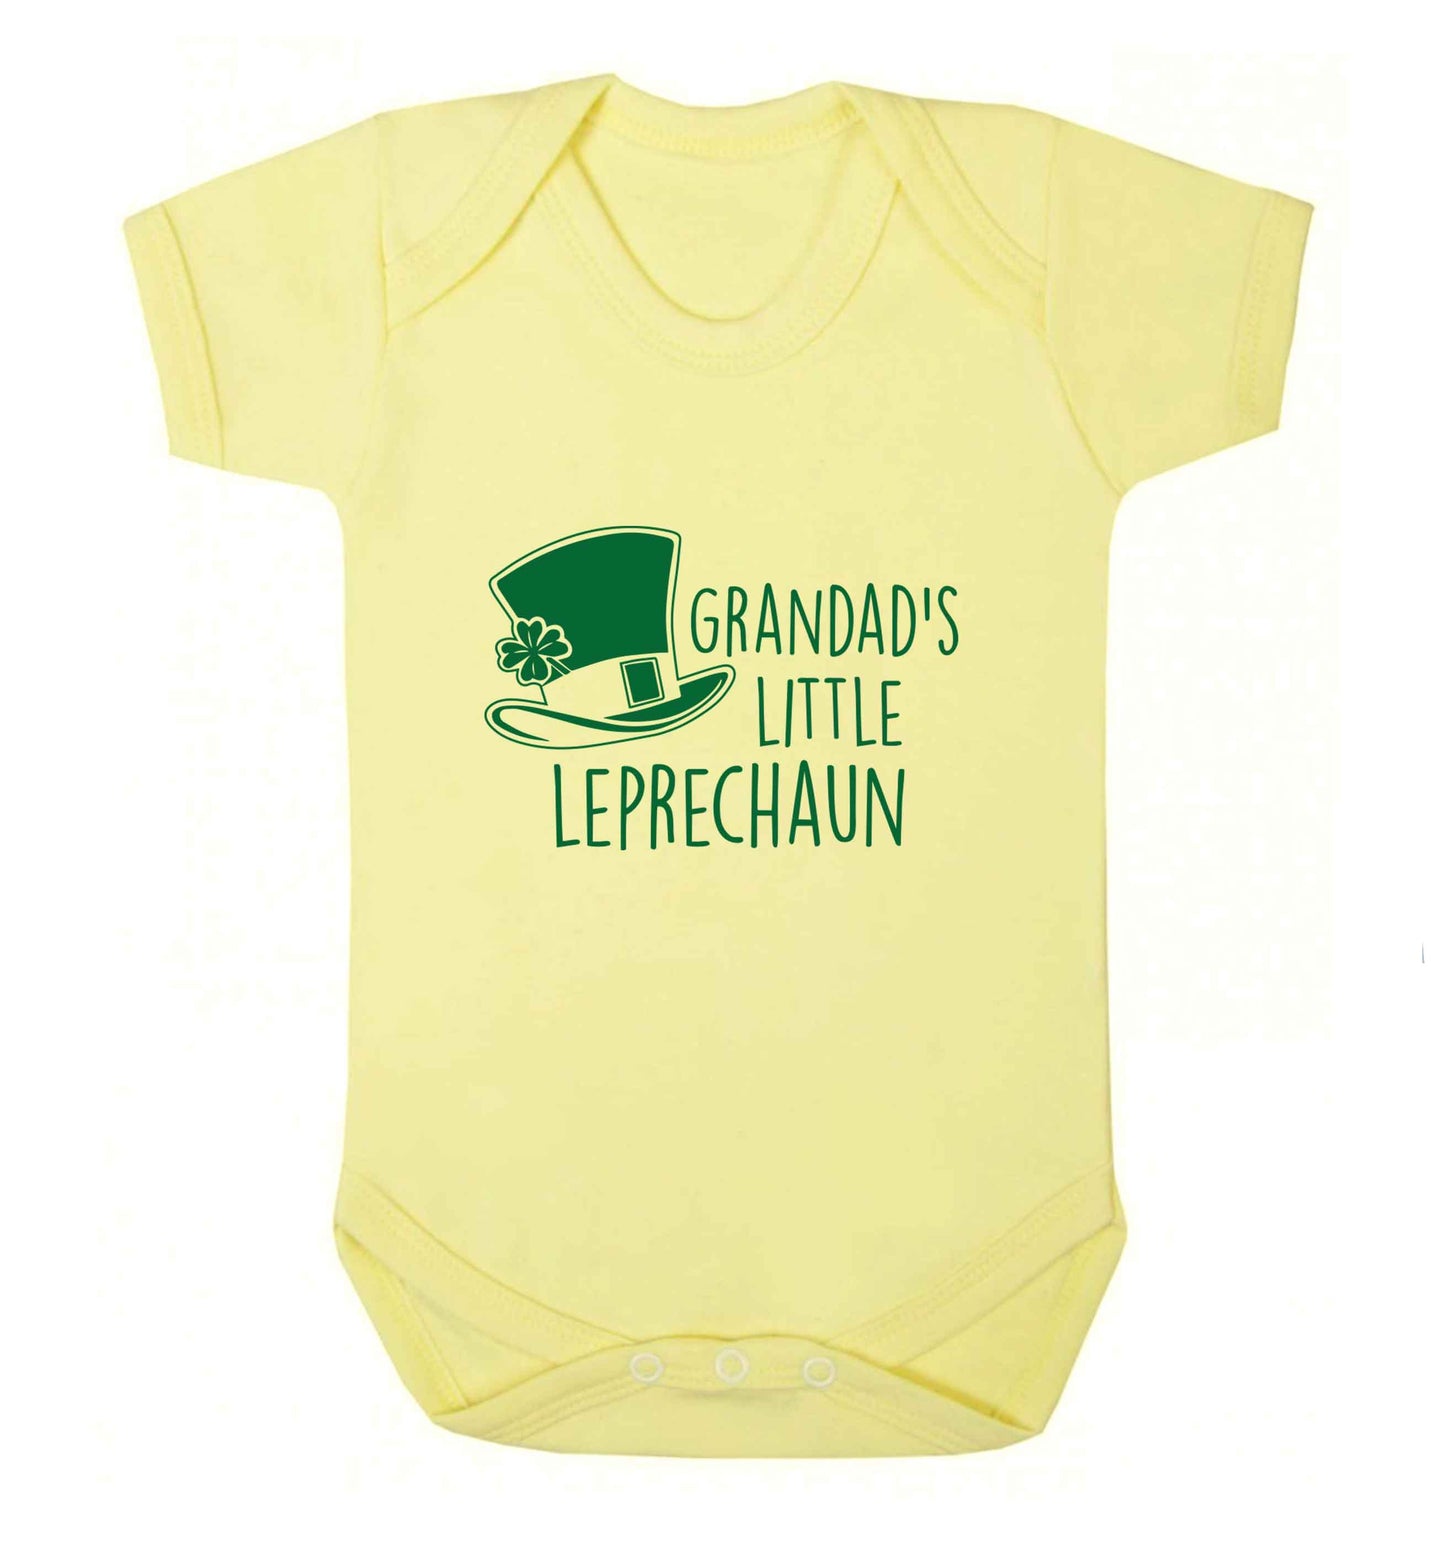 Grandad's little leprechaun baby vest pale yellow 18-24 months